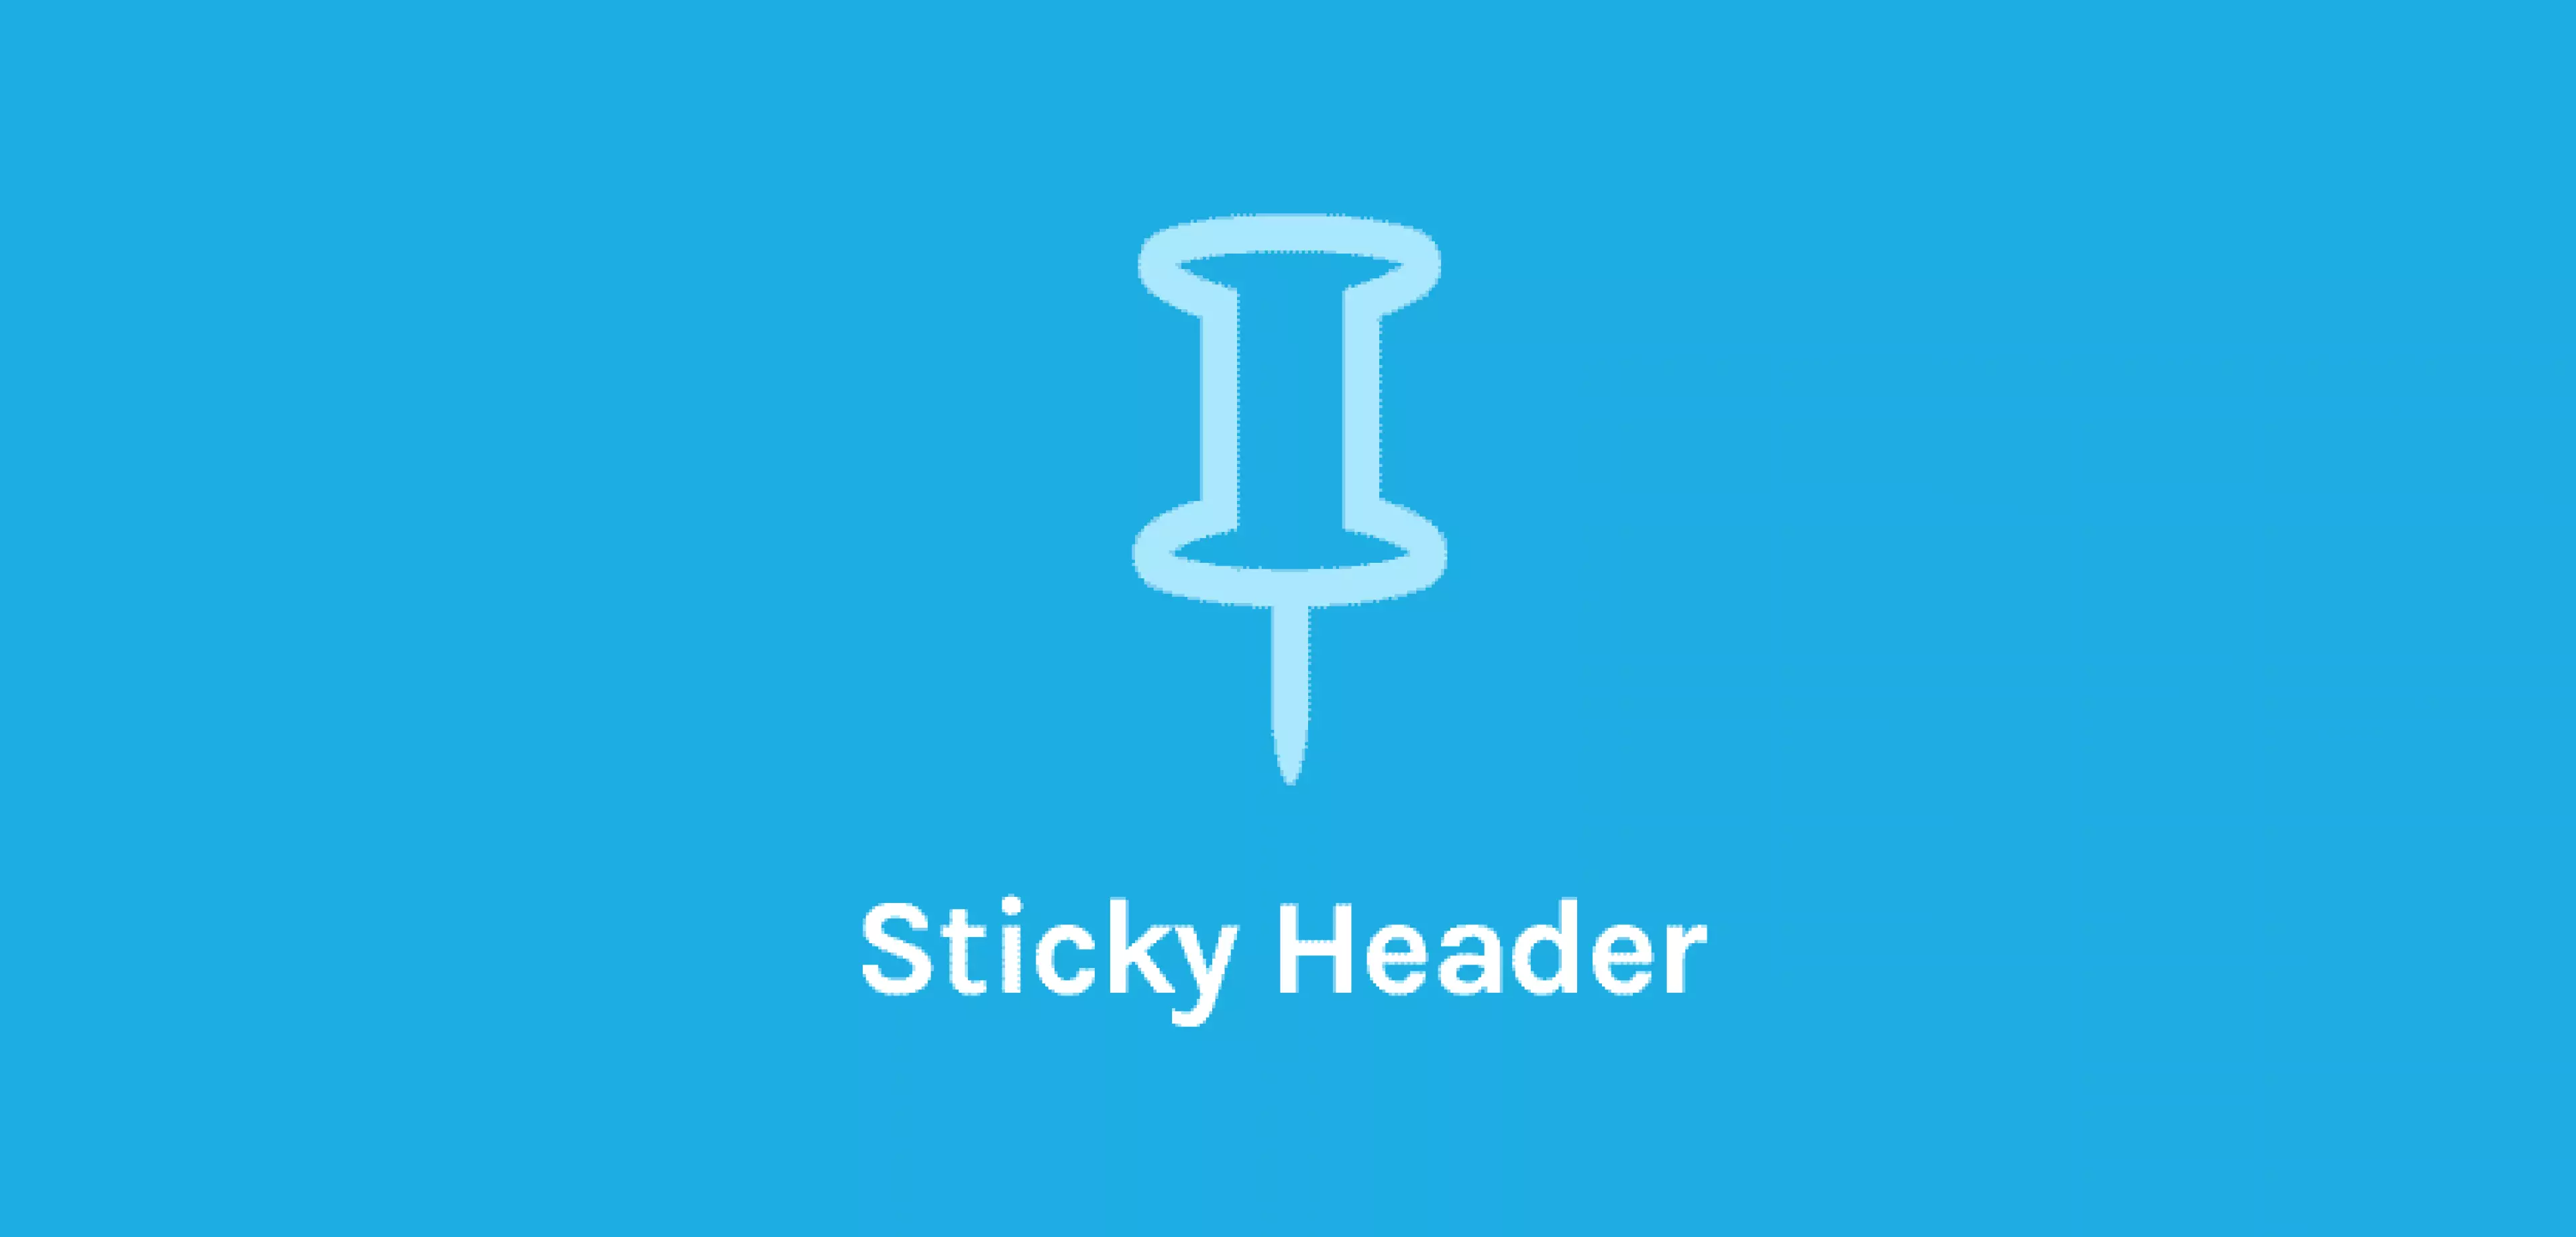 Oceanwp - Sticky Header